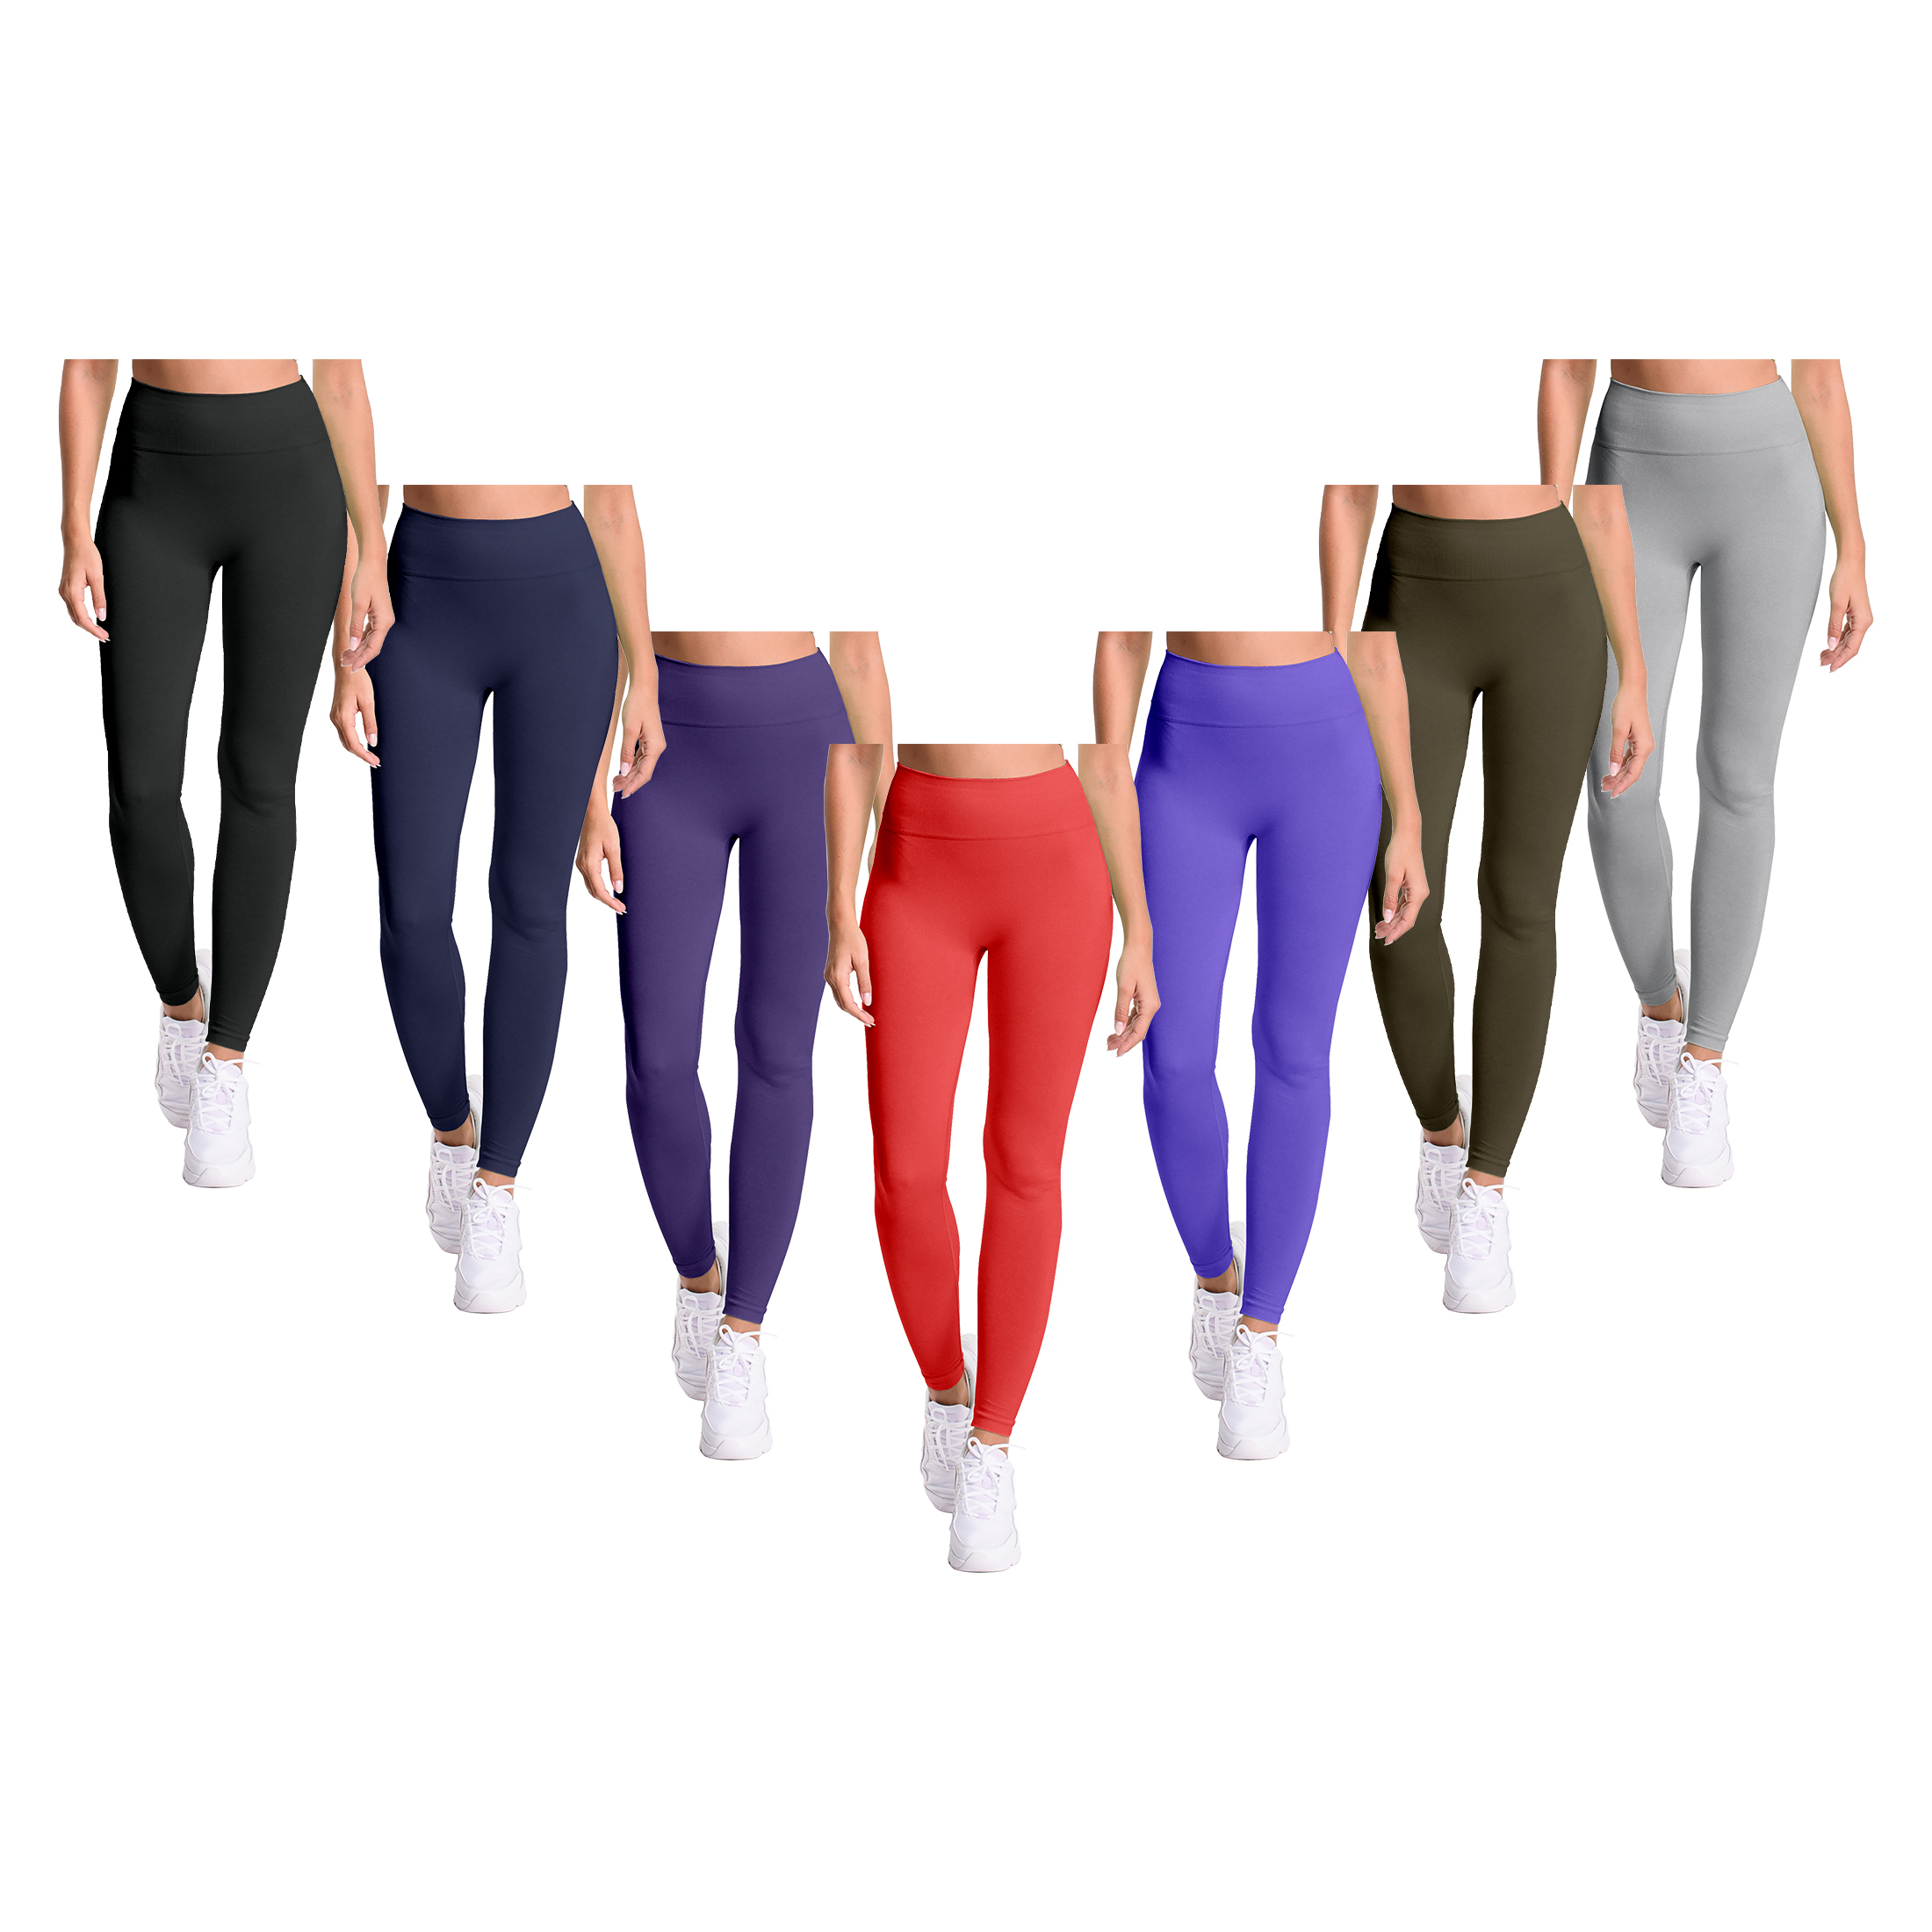 3-Pack: Women's Cozy Fleece-Lined Workout Yoga Pants Seamless Leggings - Small